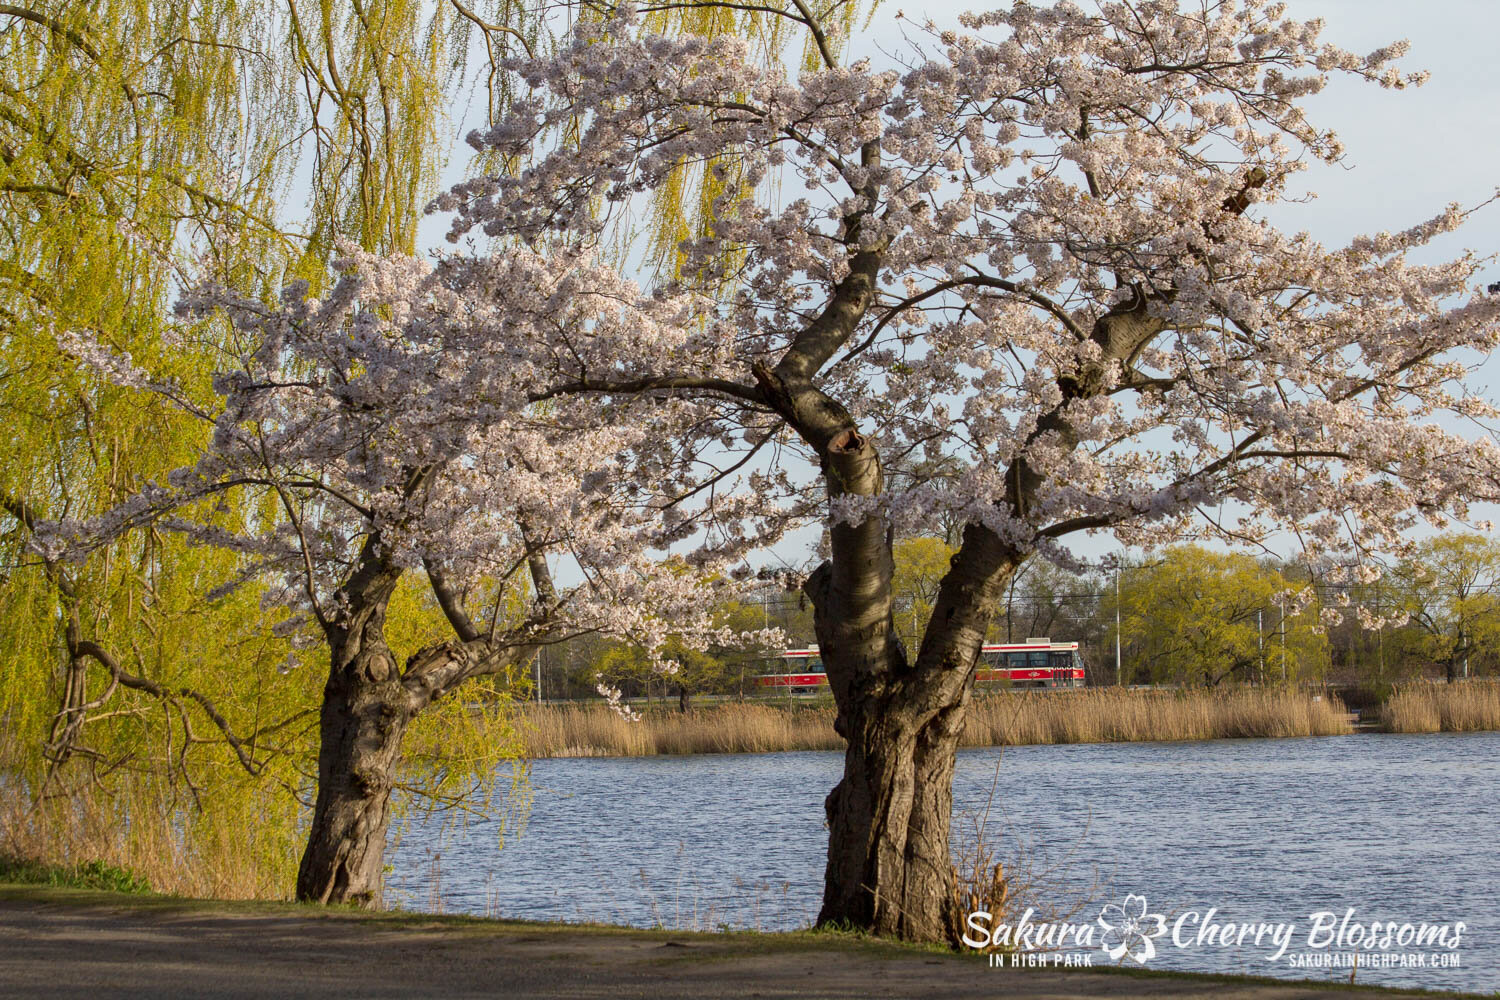  Sakura // Cherry Blossoms in High Park - April 17, 2012 - www.SakurainHighPark.com 